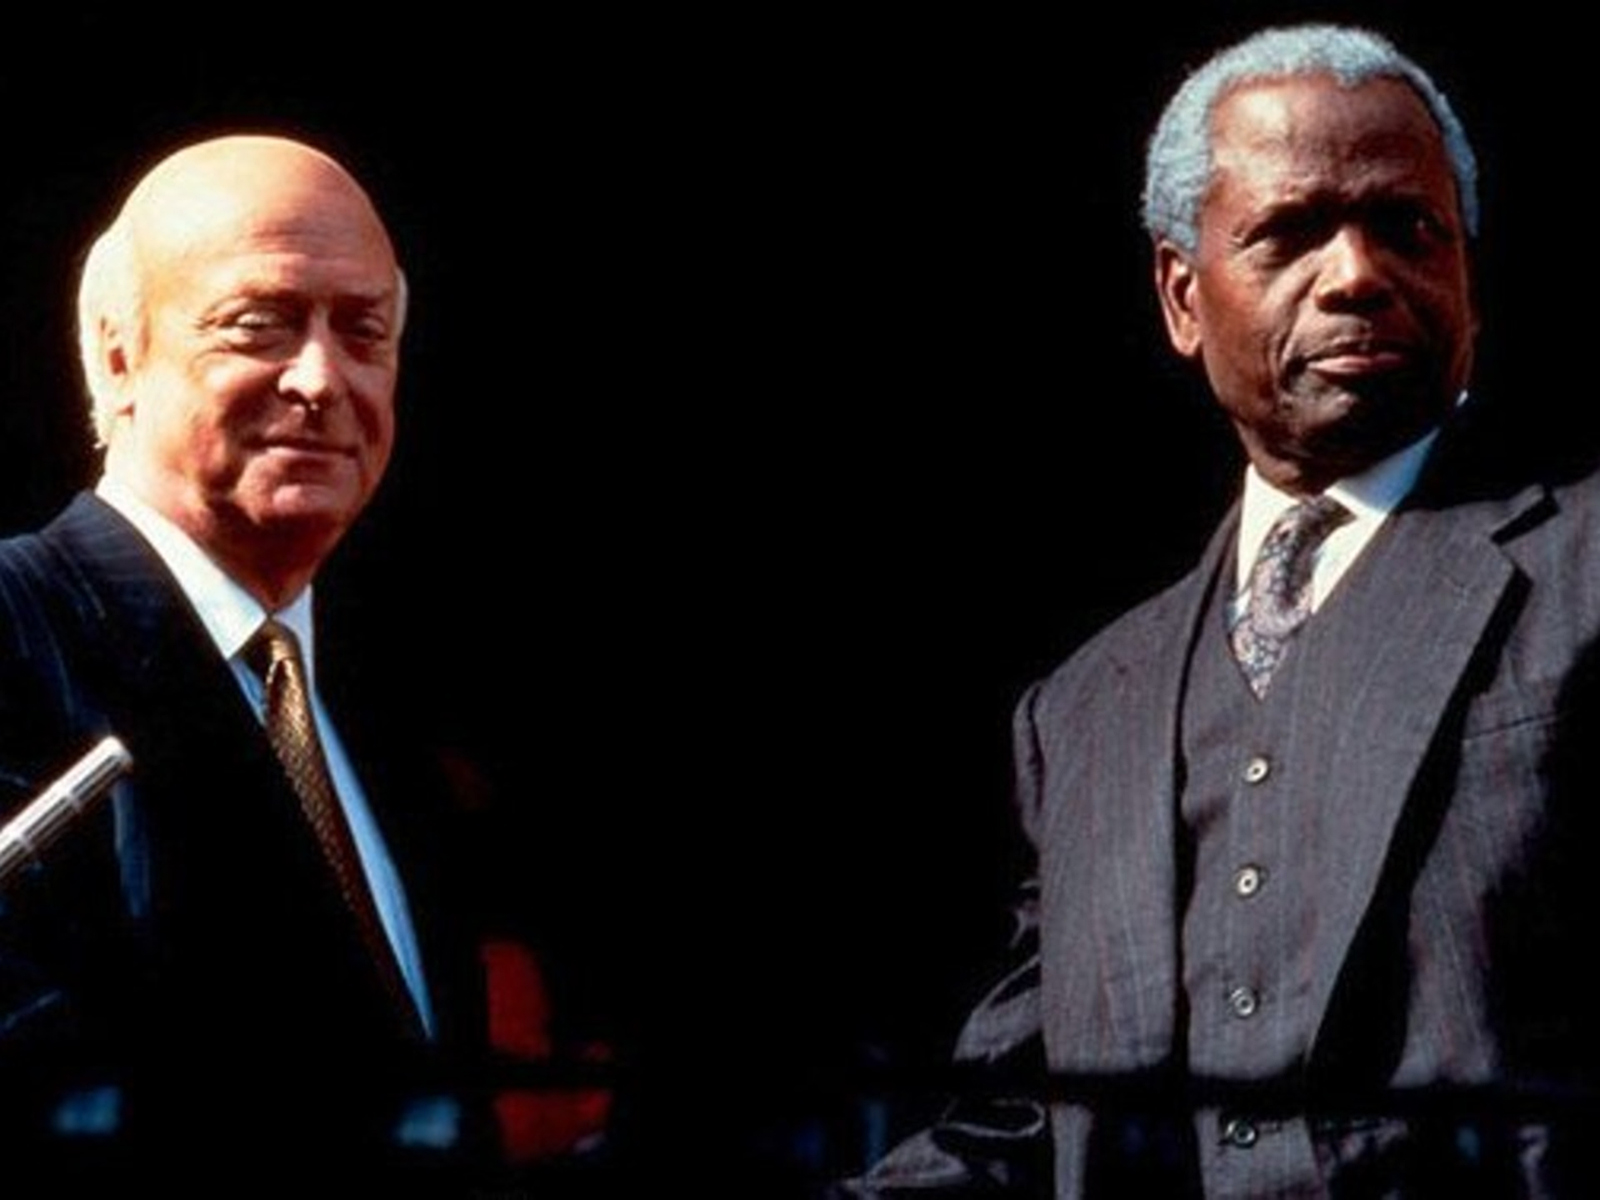 Michael Caine and Sidney Poitier in “Mandela and de Klerk” (1997)